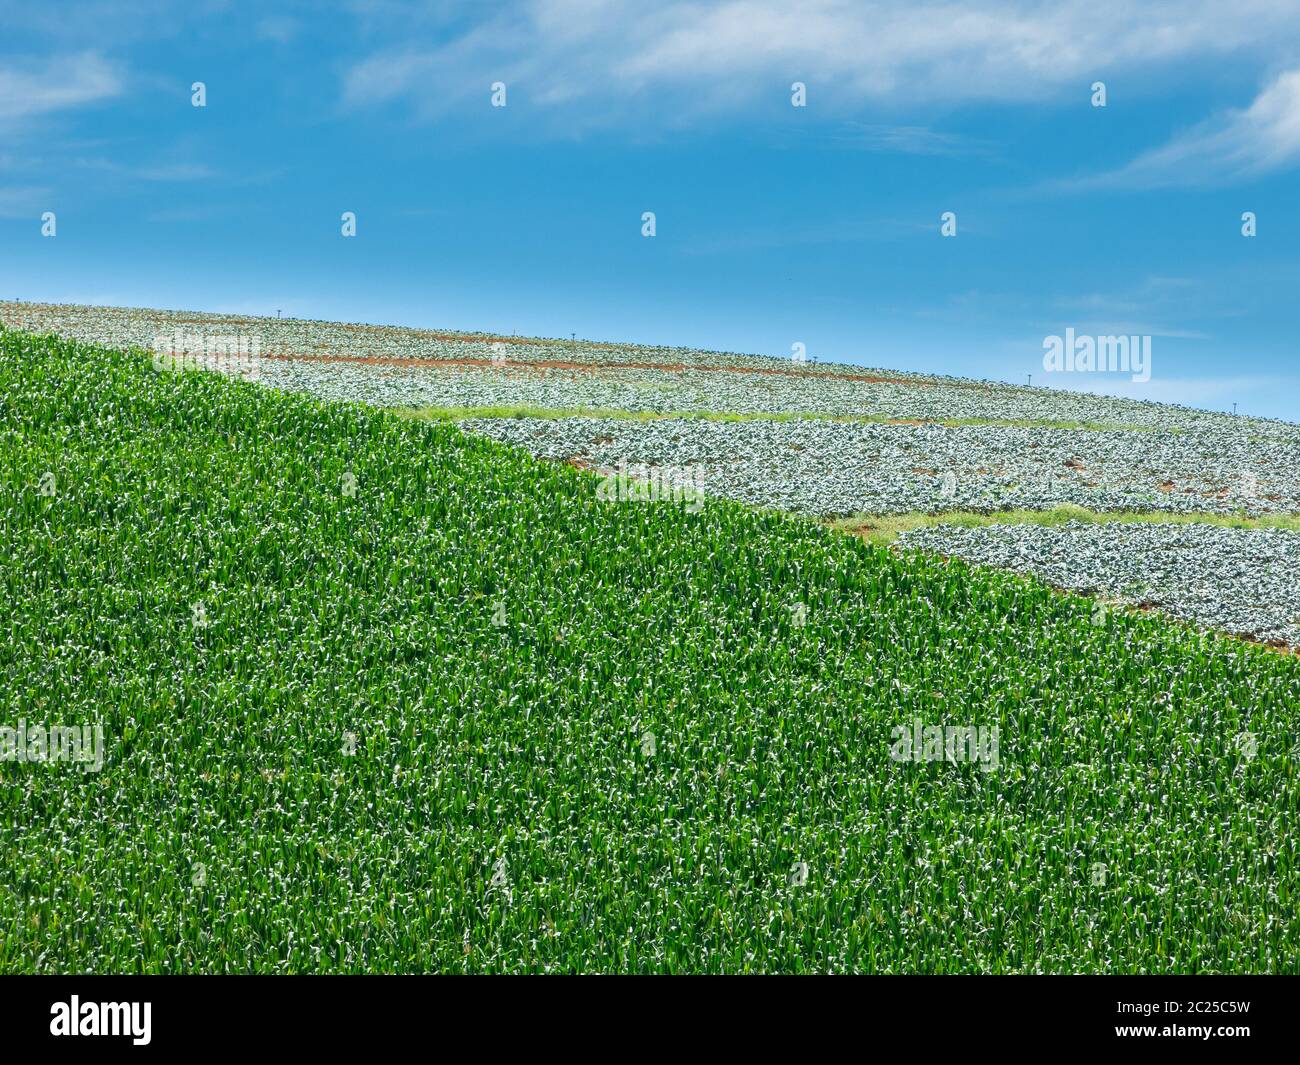 Corn field plantation in Brazil Stock Photo